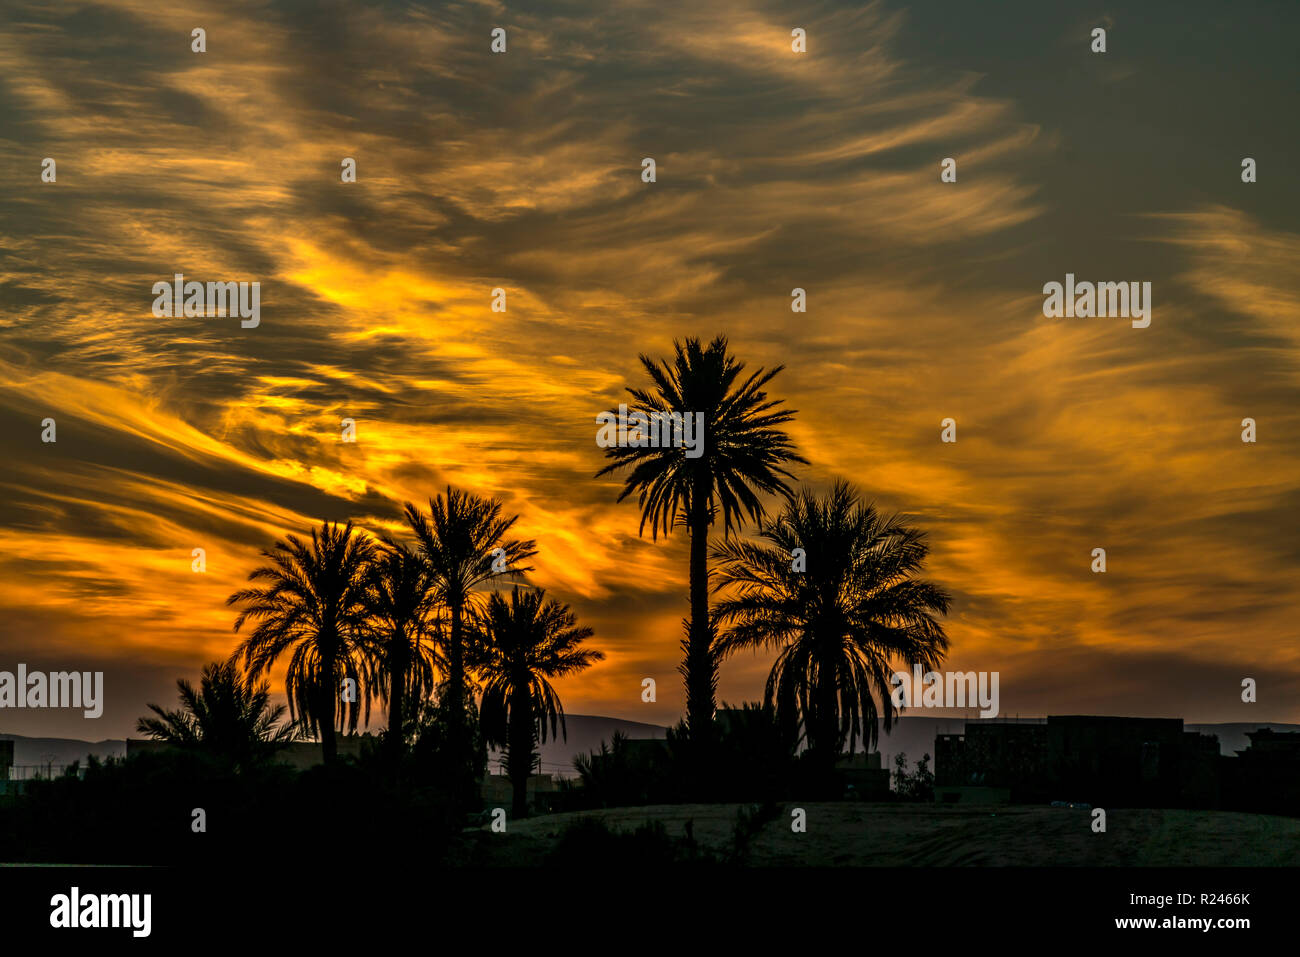 Dattelpalmen im Sonnenaufgang, Merzouga, Marokko | Dattelpalmen bei Sonnenaufgang, Merzouga, Königreich Marokko, Afrika Stockfoto